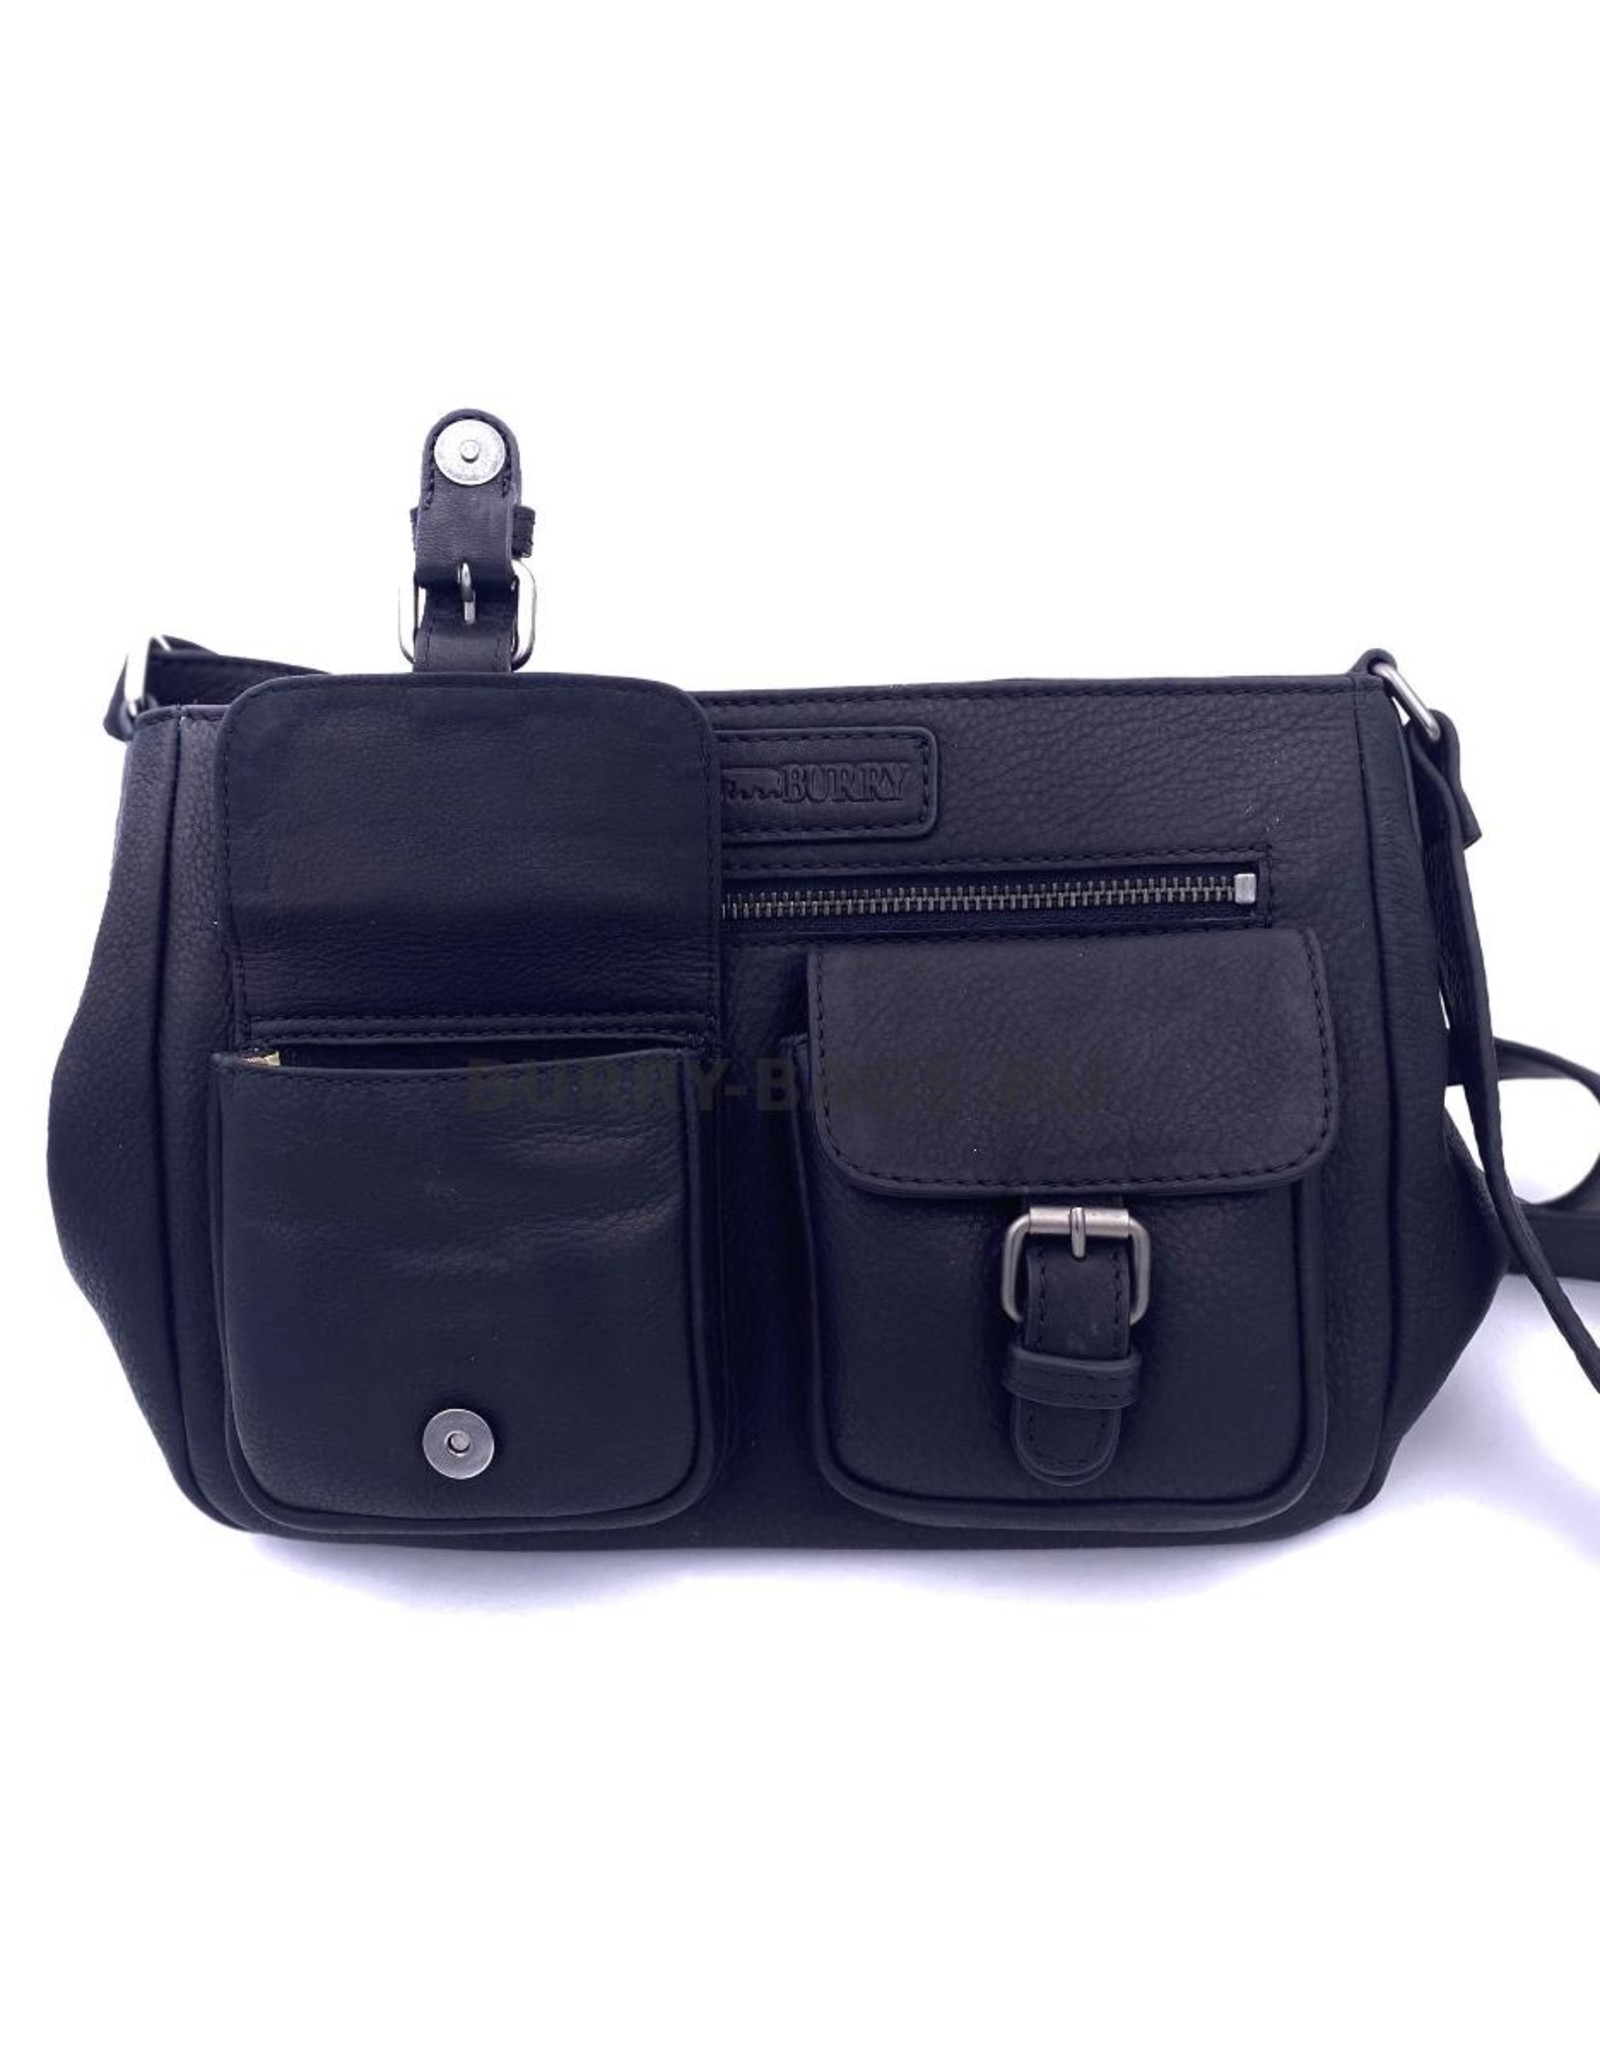 HillBurry Leather Shoulder bags  Leather crossbody bags - HillBurry Leather Shoulder Bag with multiple pockets black